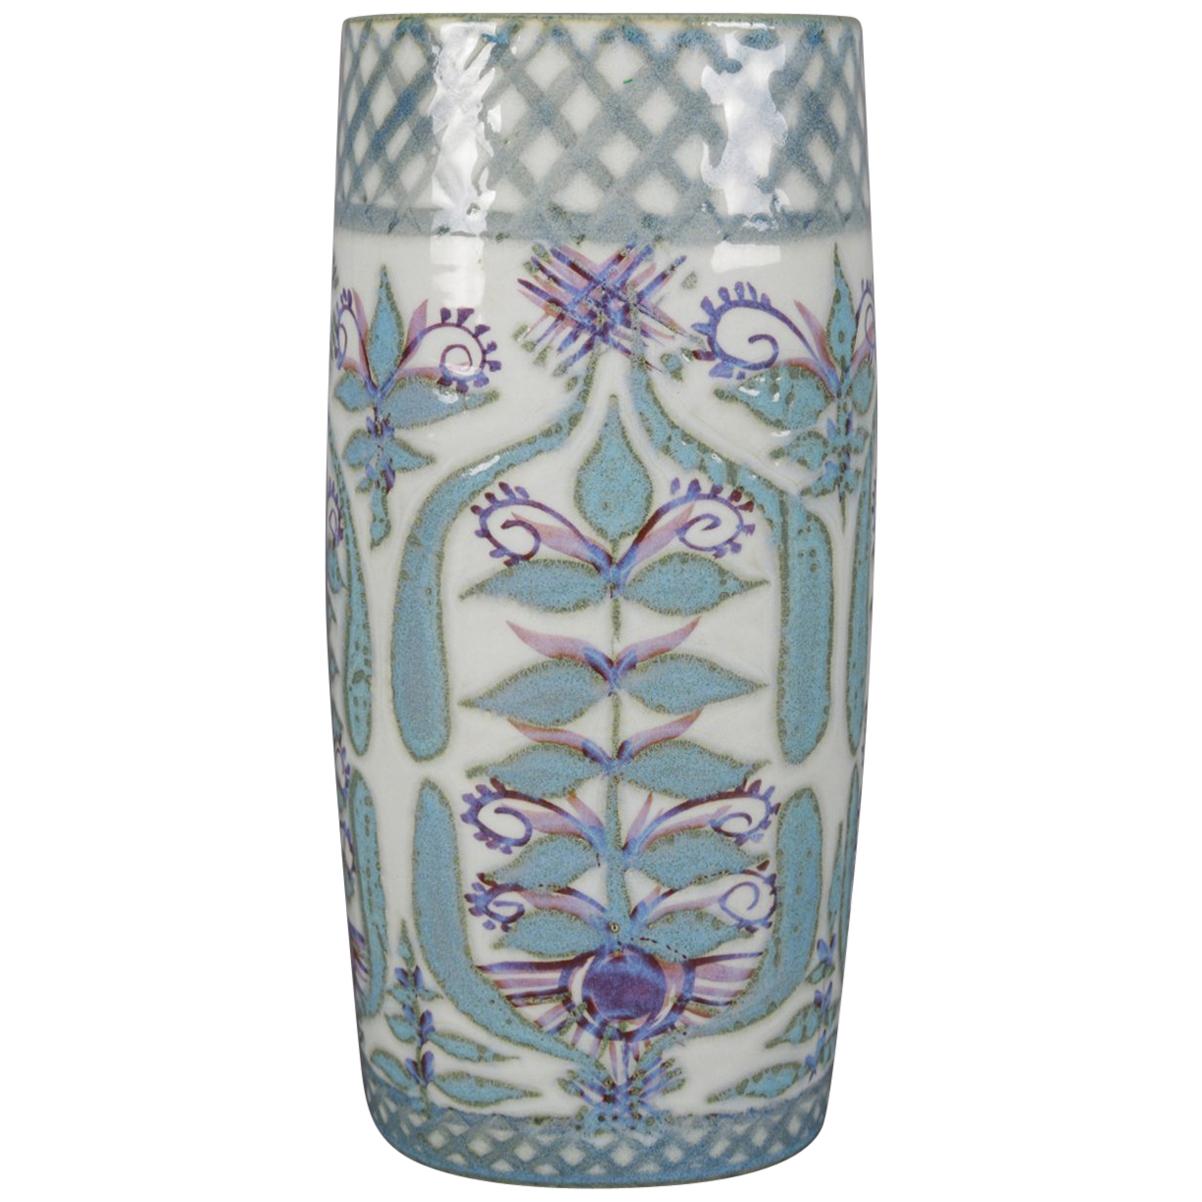 Midcentury Danish Modern Royal Copenhagen Faience Stylized Floral Vase